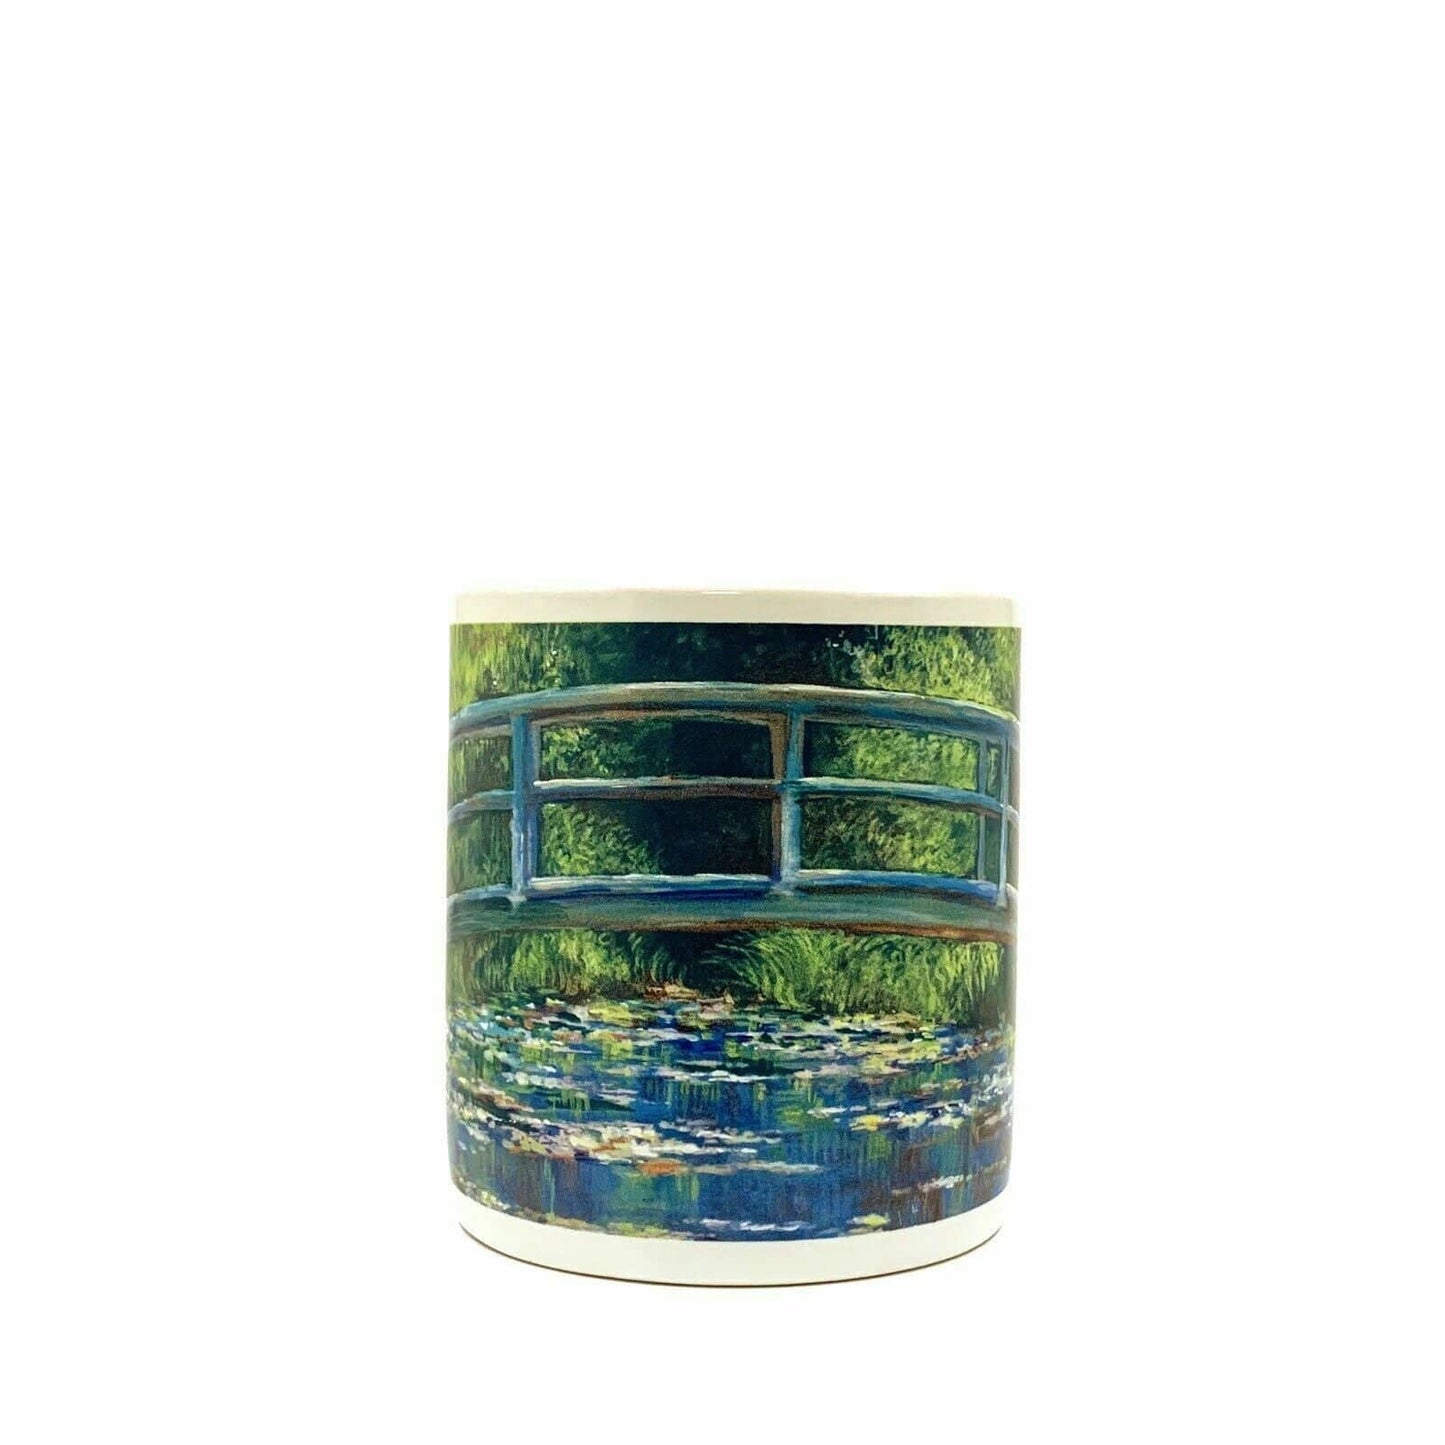 Captivating Claude Monet Ceramic Coffee Cup - 16oz White